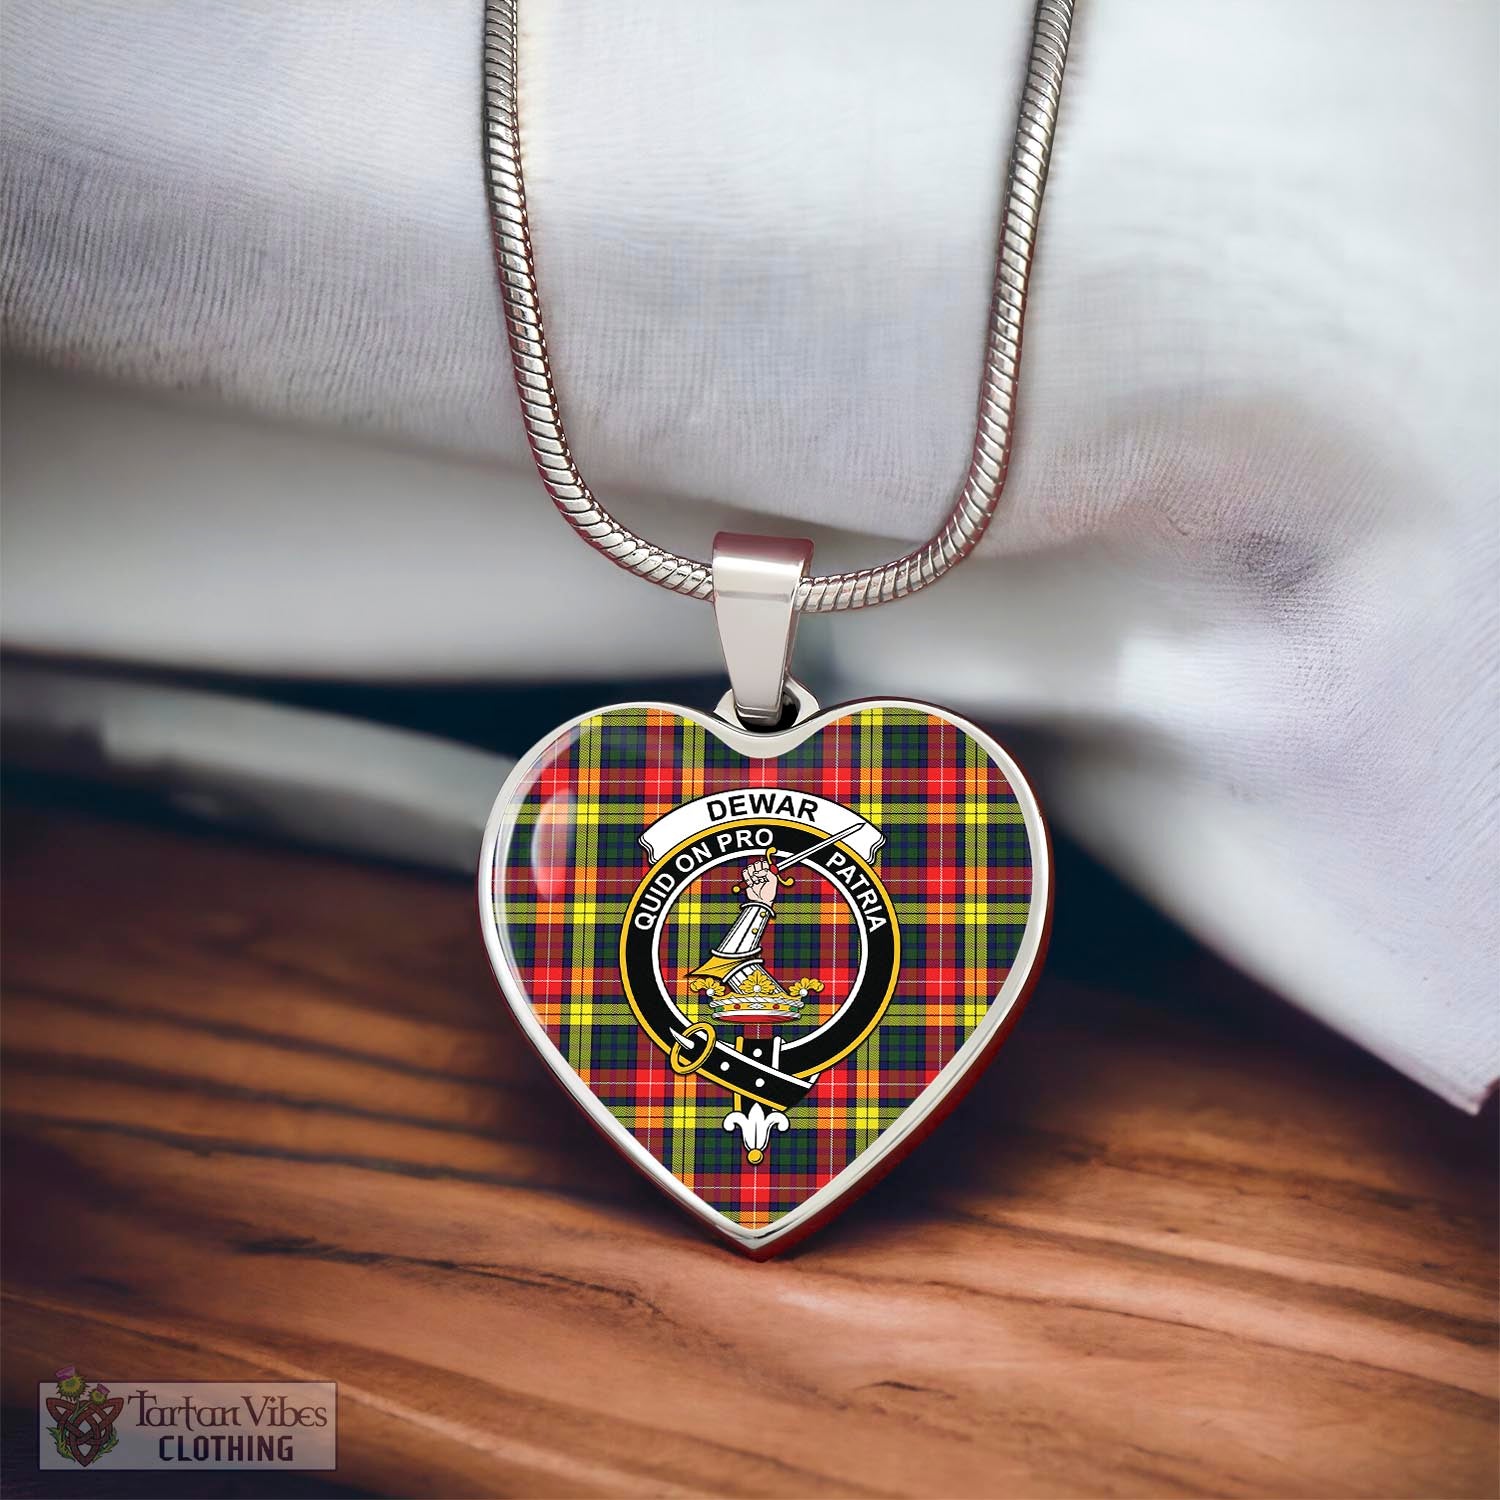 Tartan Vibes Clothing Dewar Tartan Heart Necklace with Family Crest